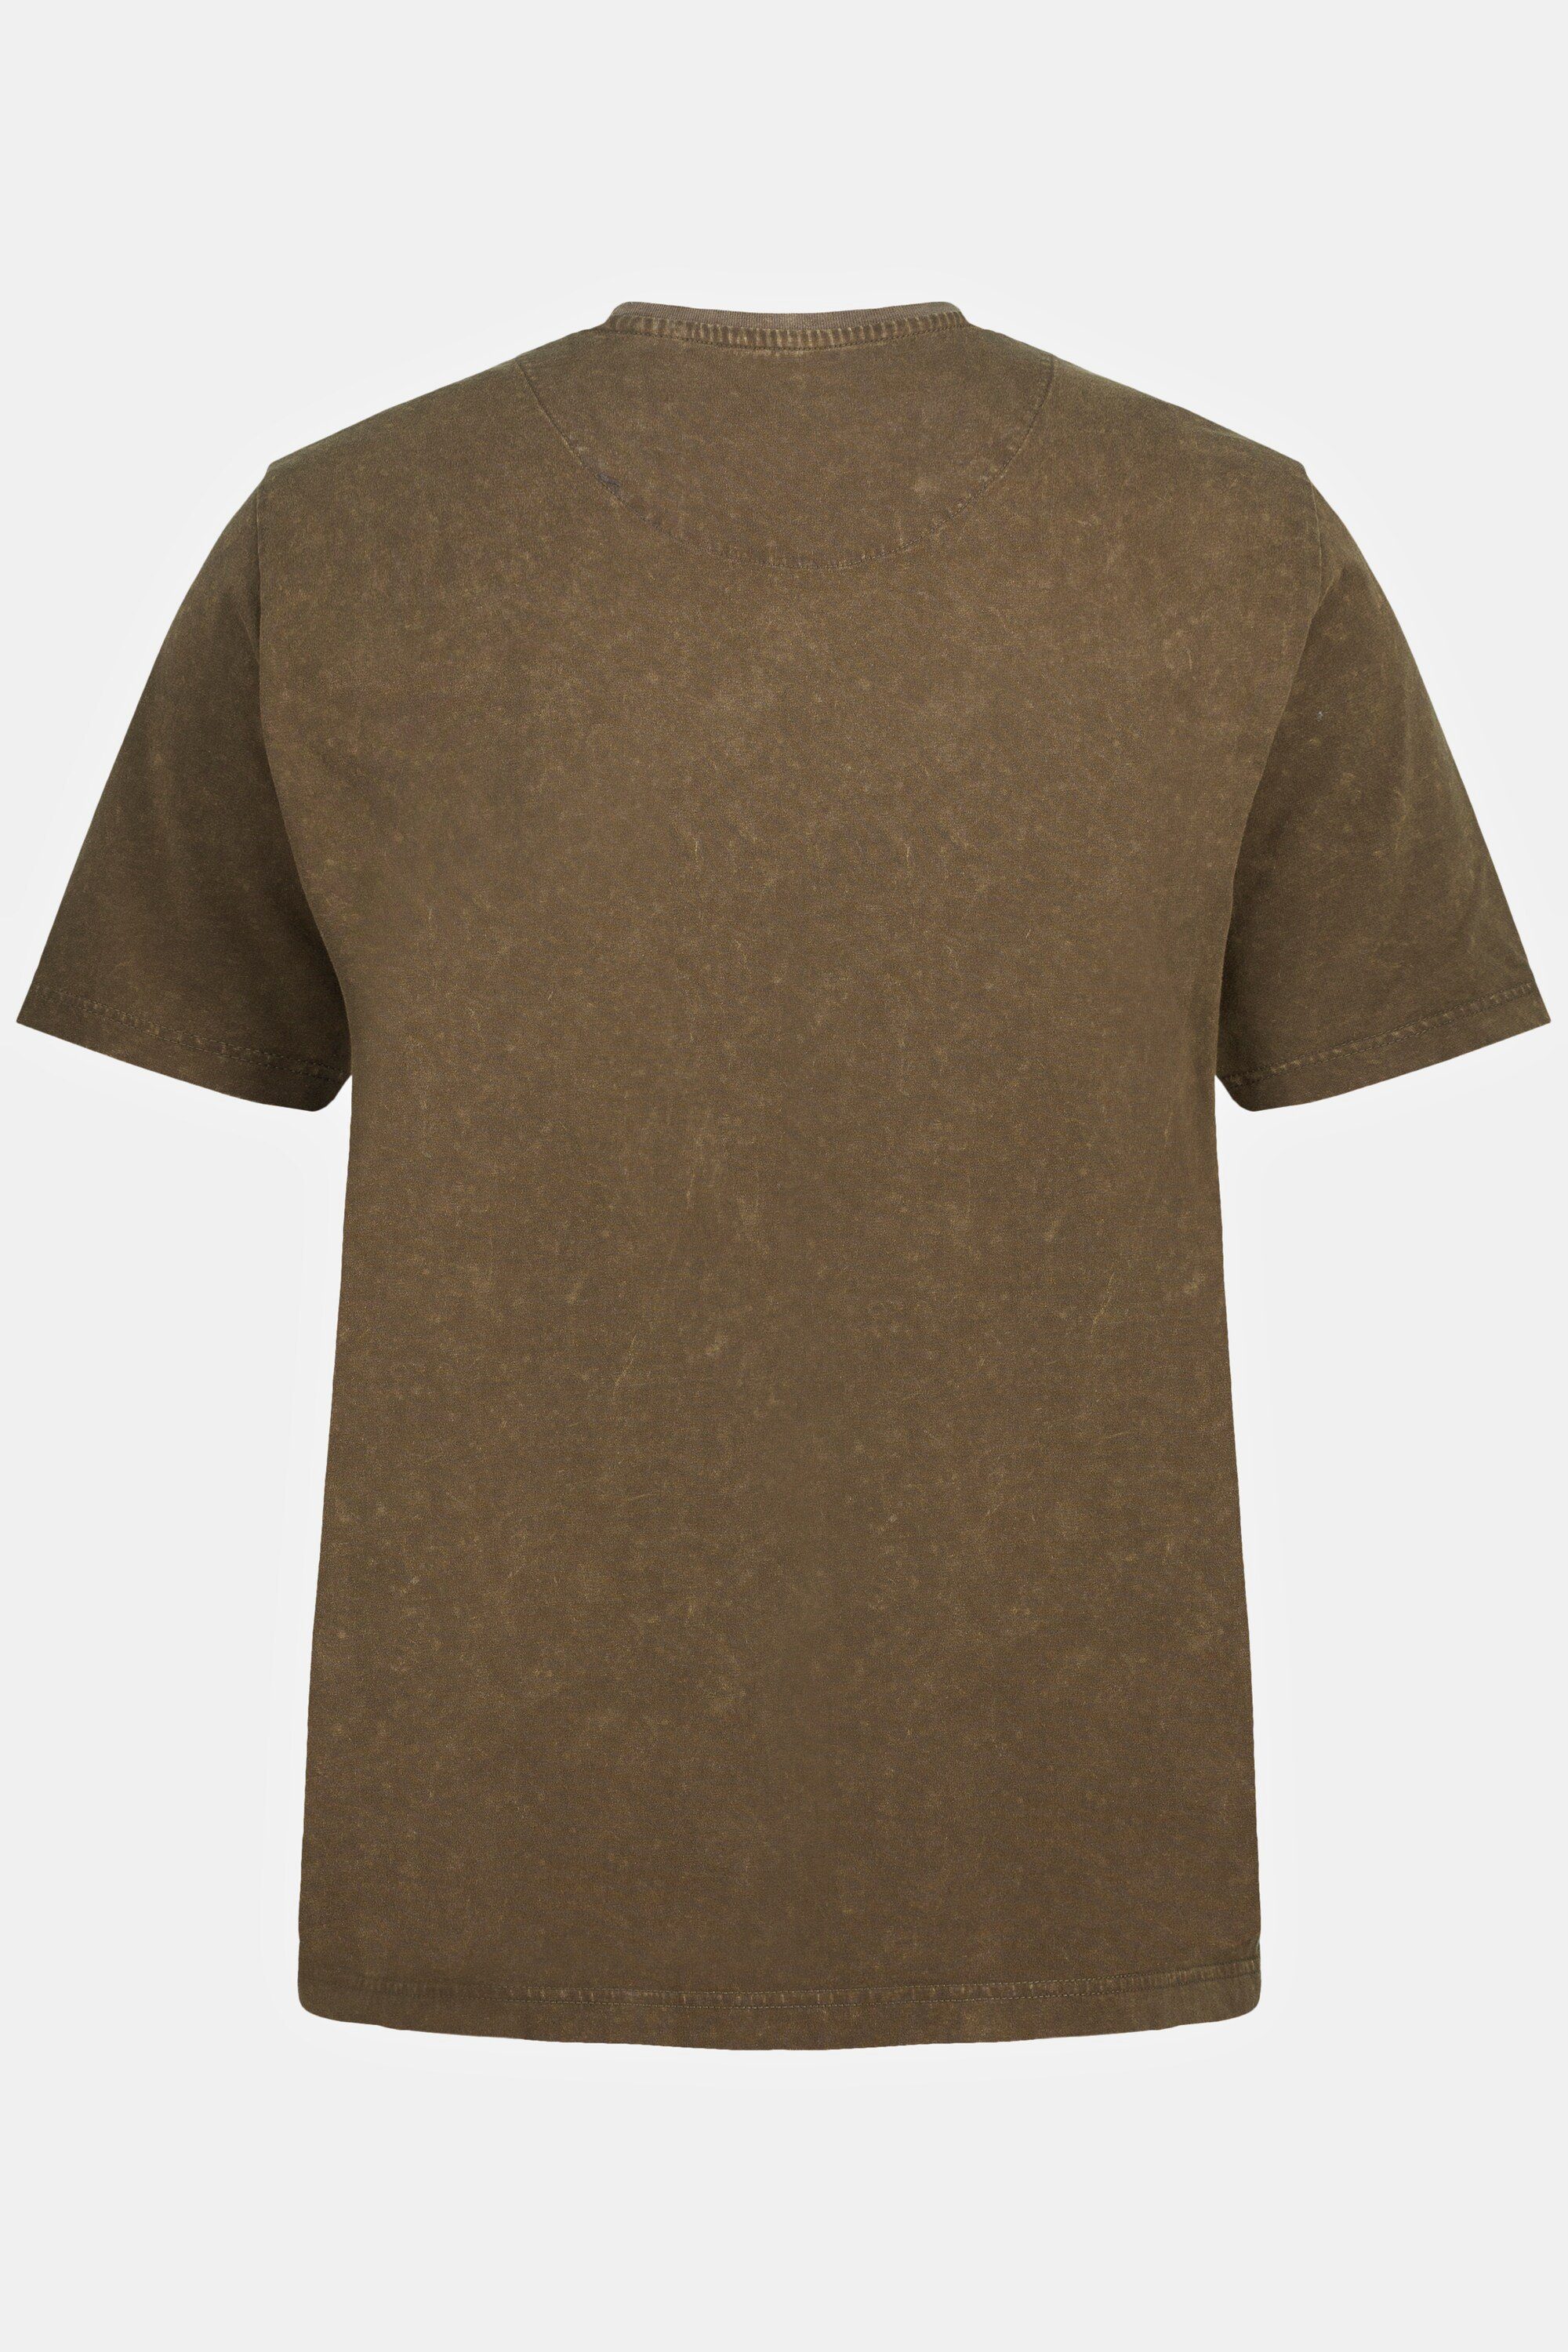 T-Shirt Halbarm Brustprint Vintage Look JP1880 Fotoprint T-Shirt